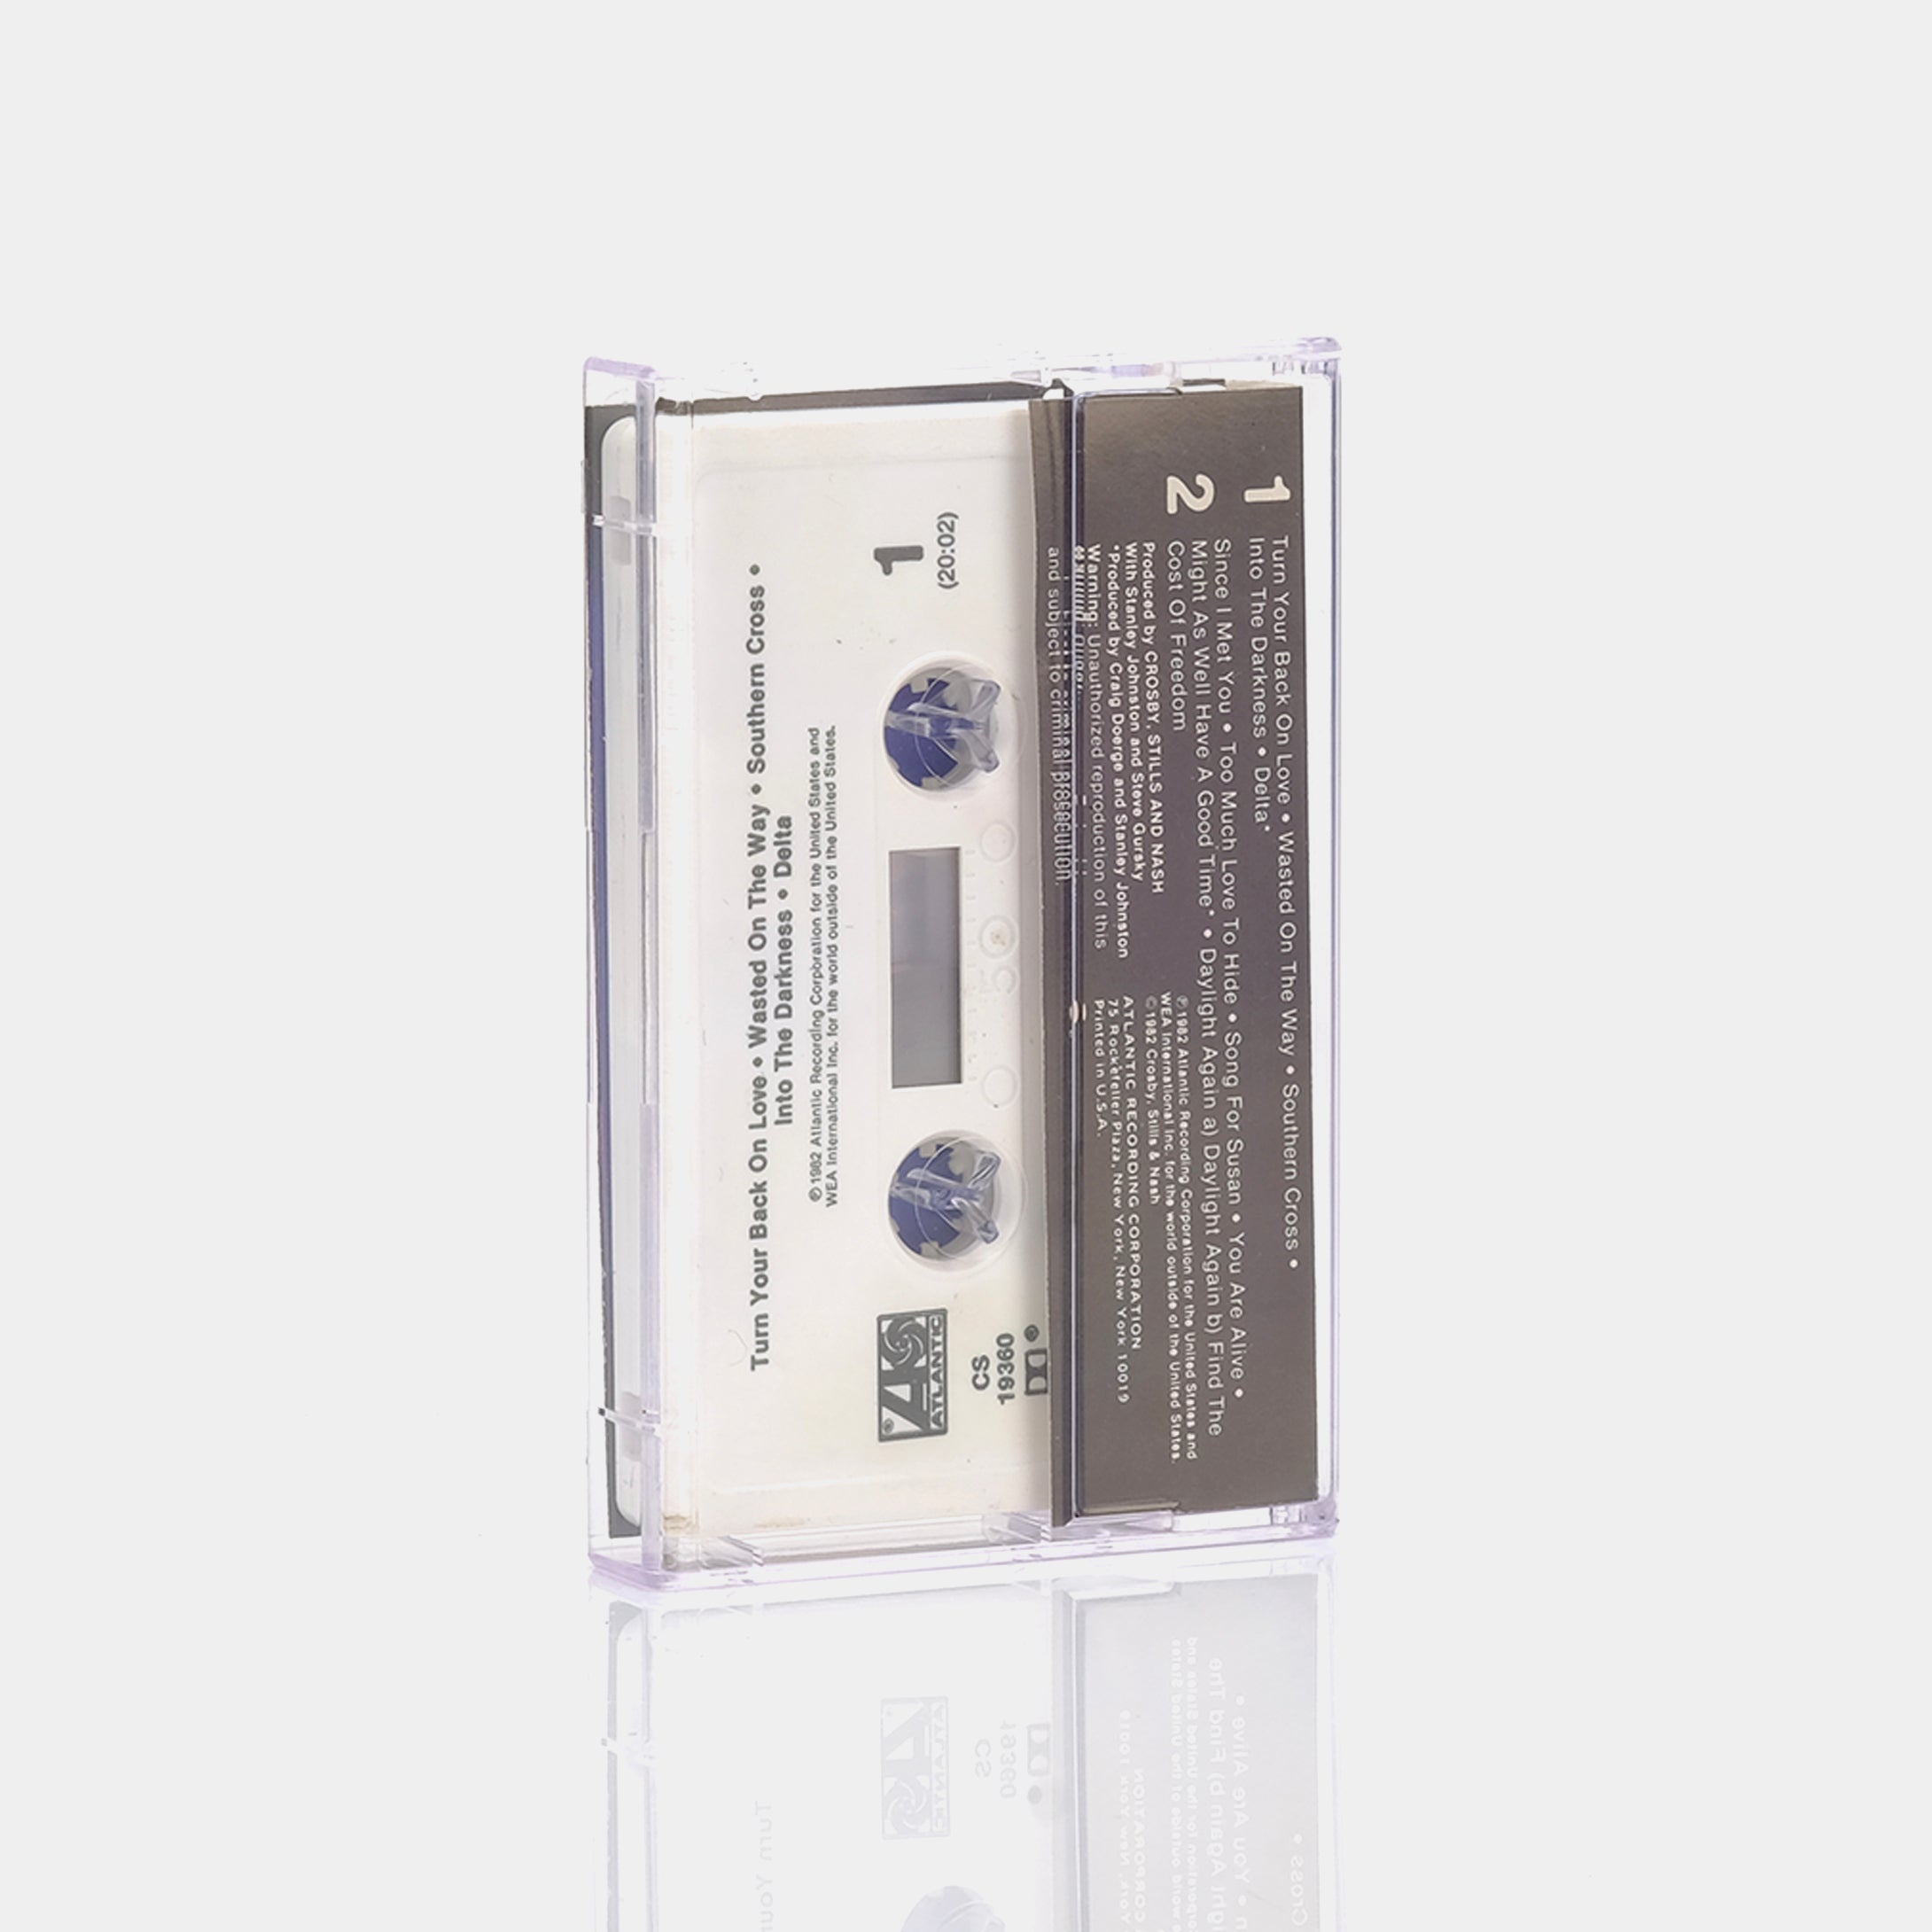 Crosby, Stills & Nash - Daylight Again Cassette Tape